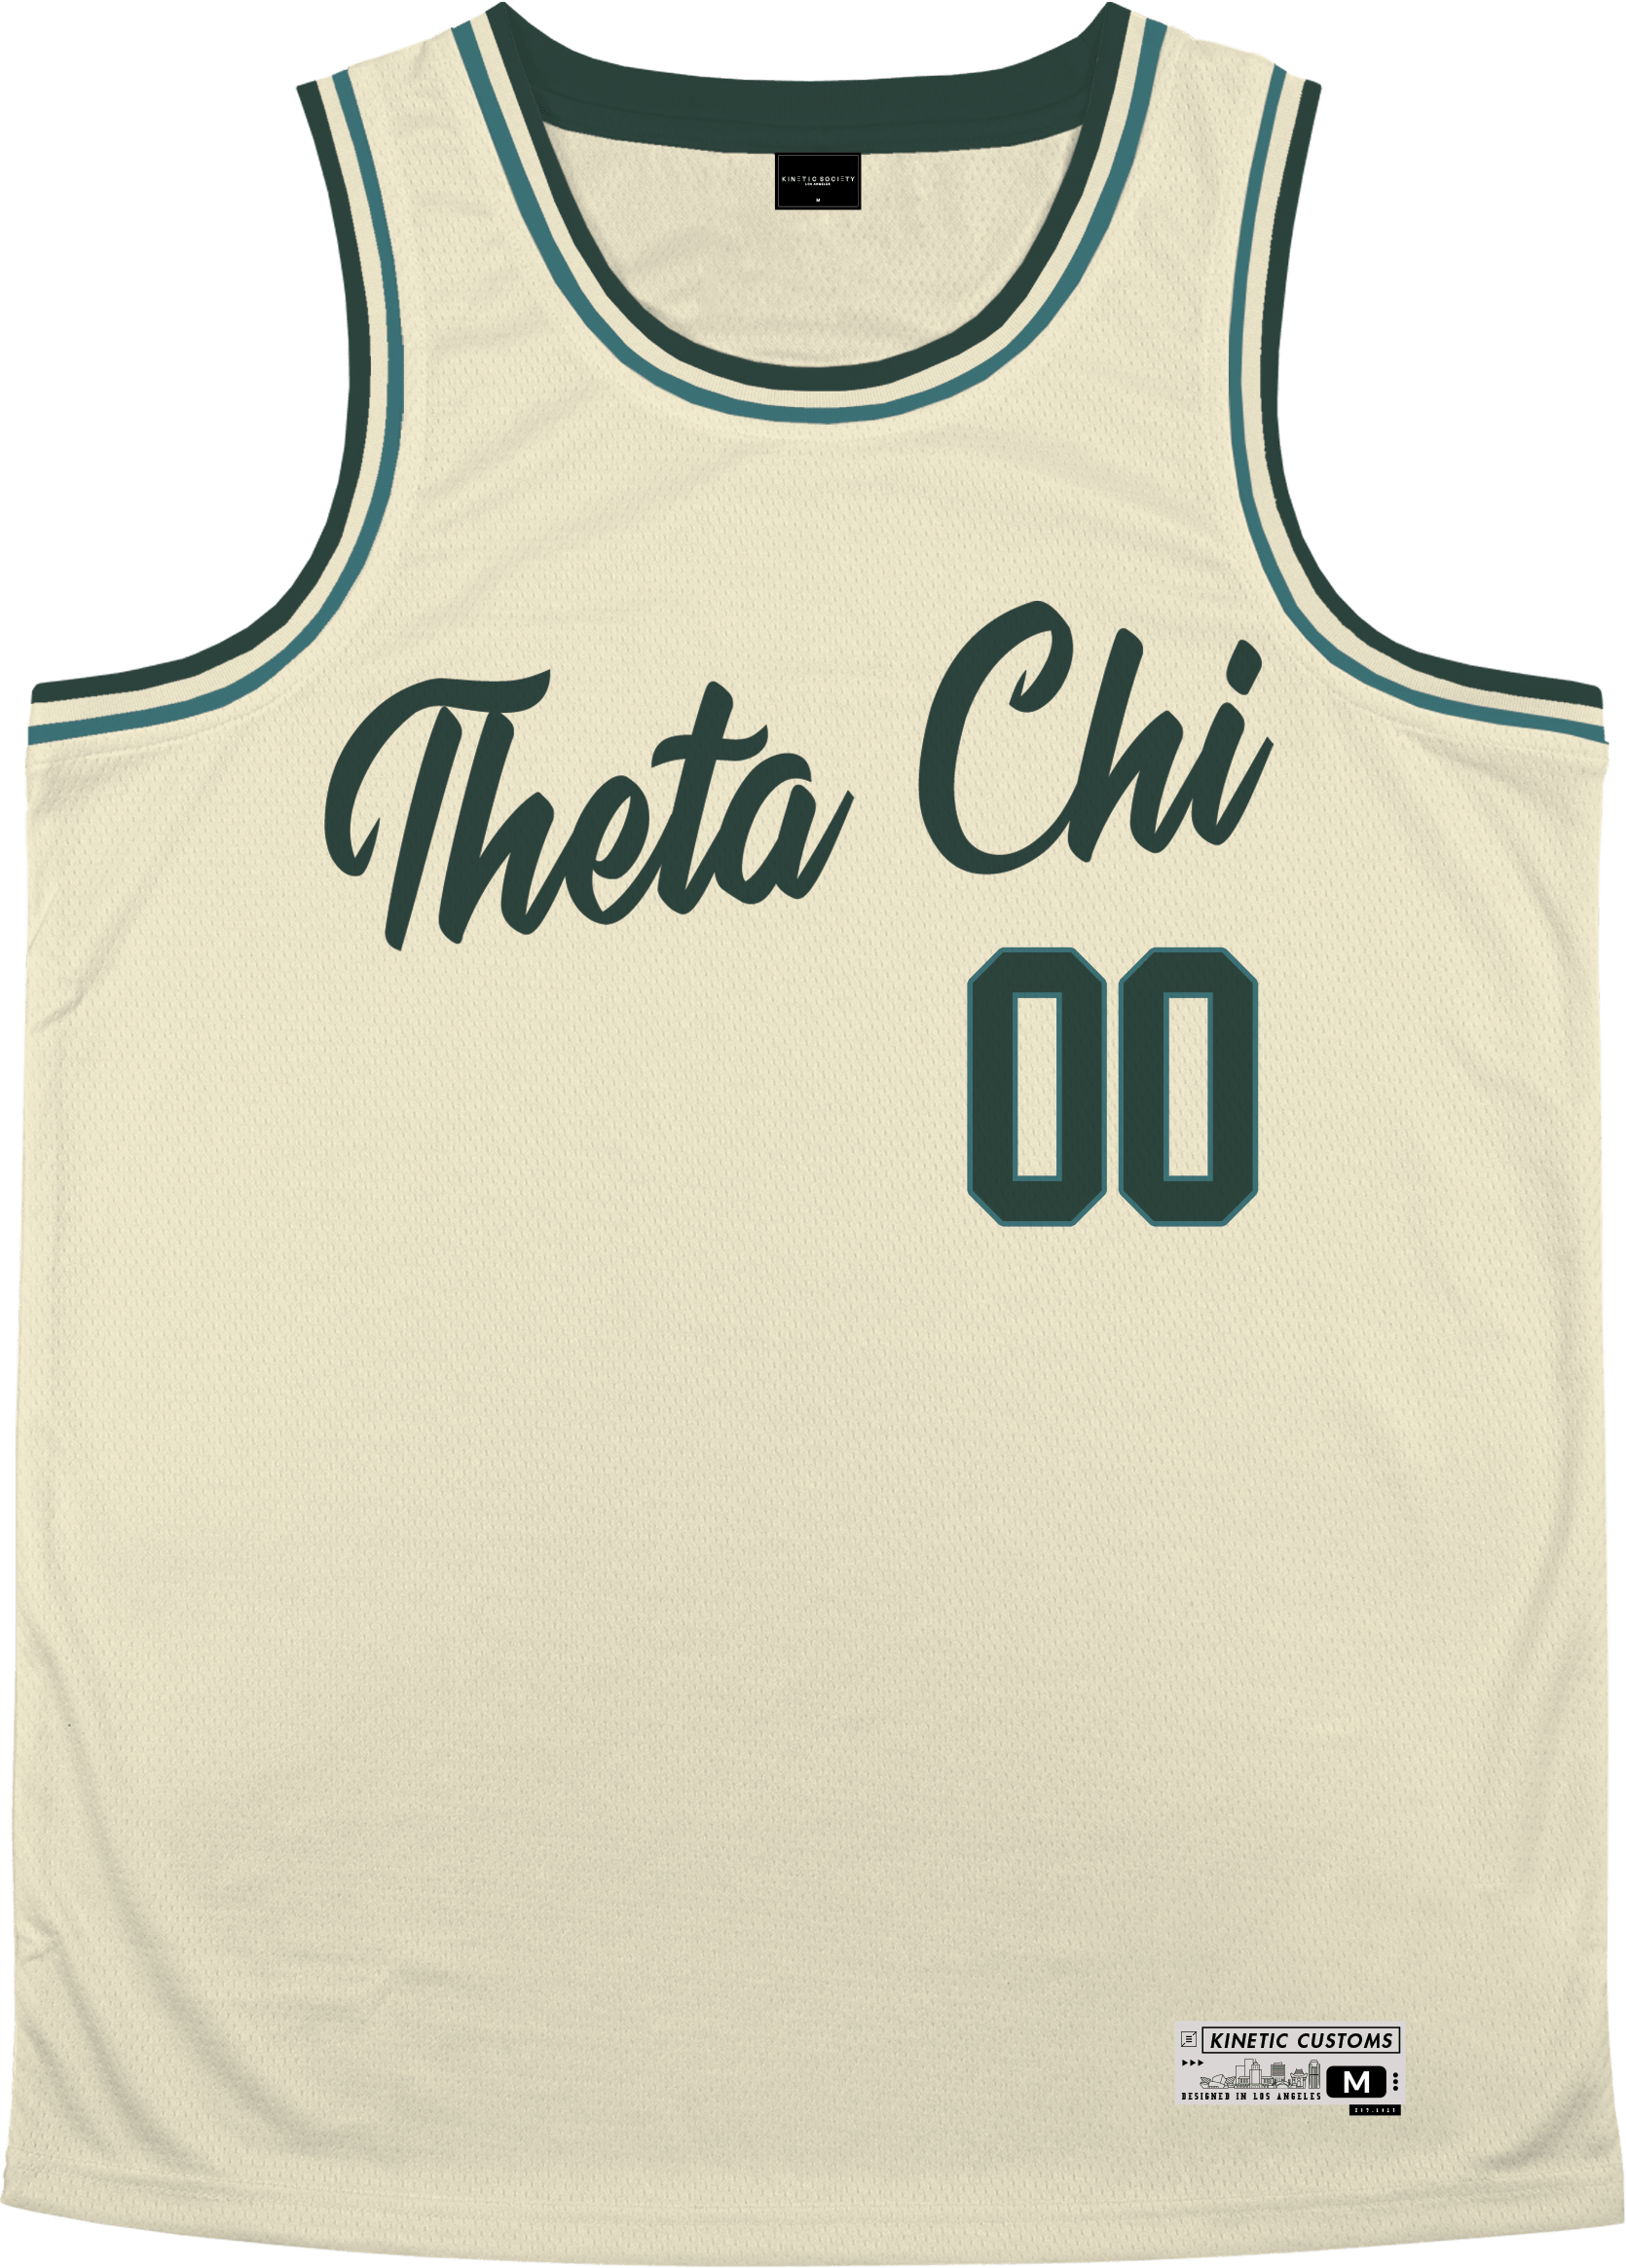 Theta Chi - Buttercream Basketball Jersey - Kinetic Society